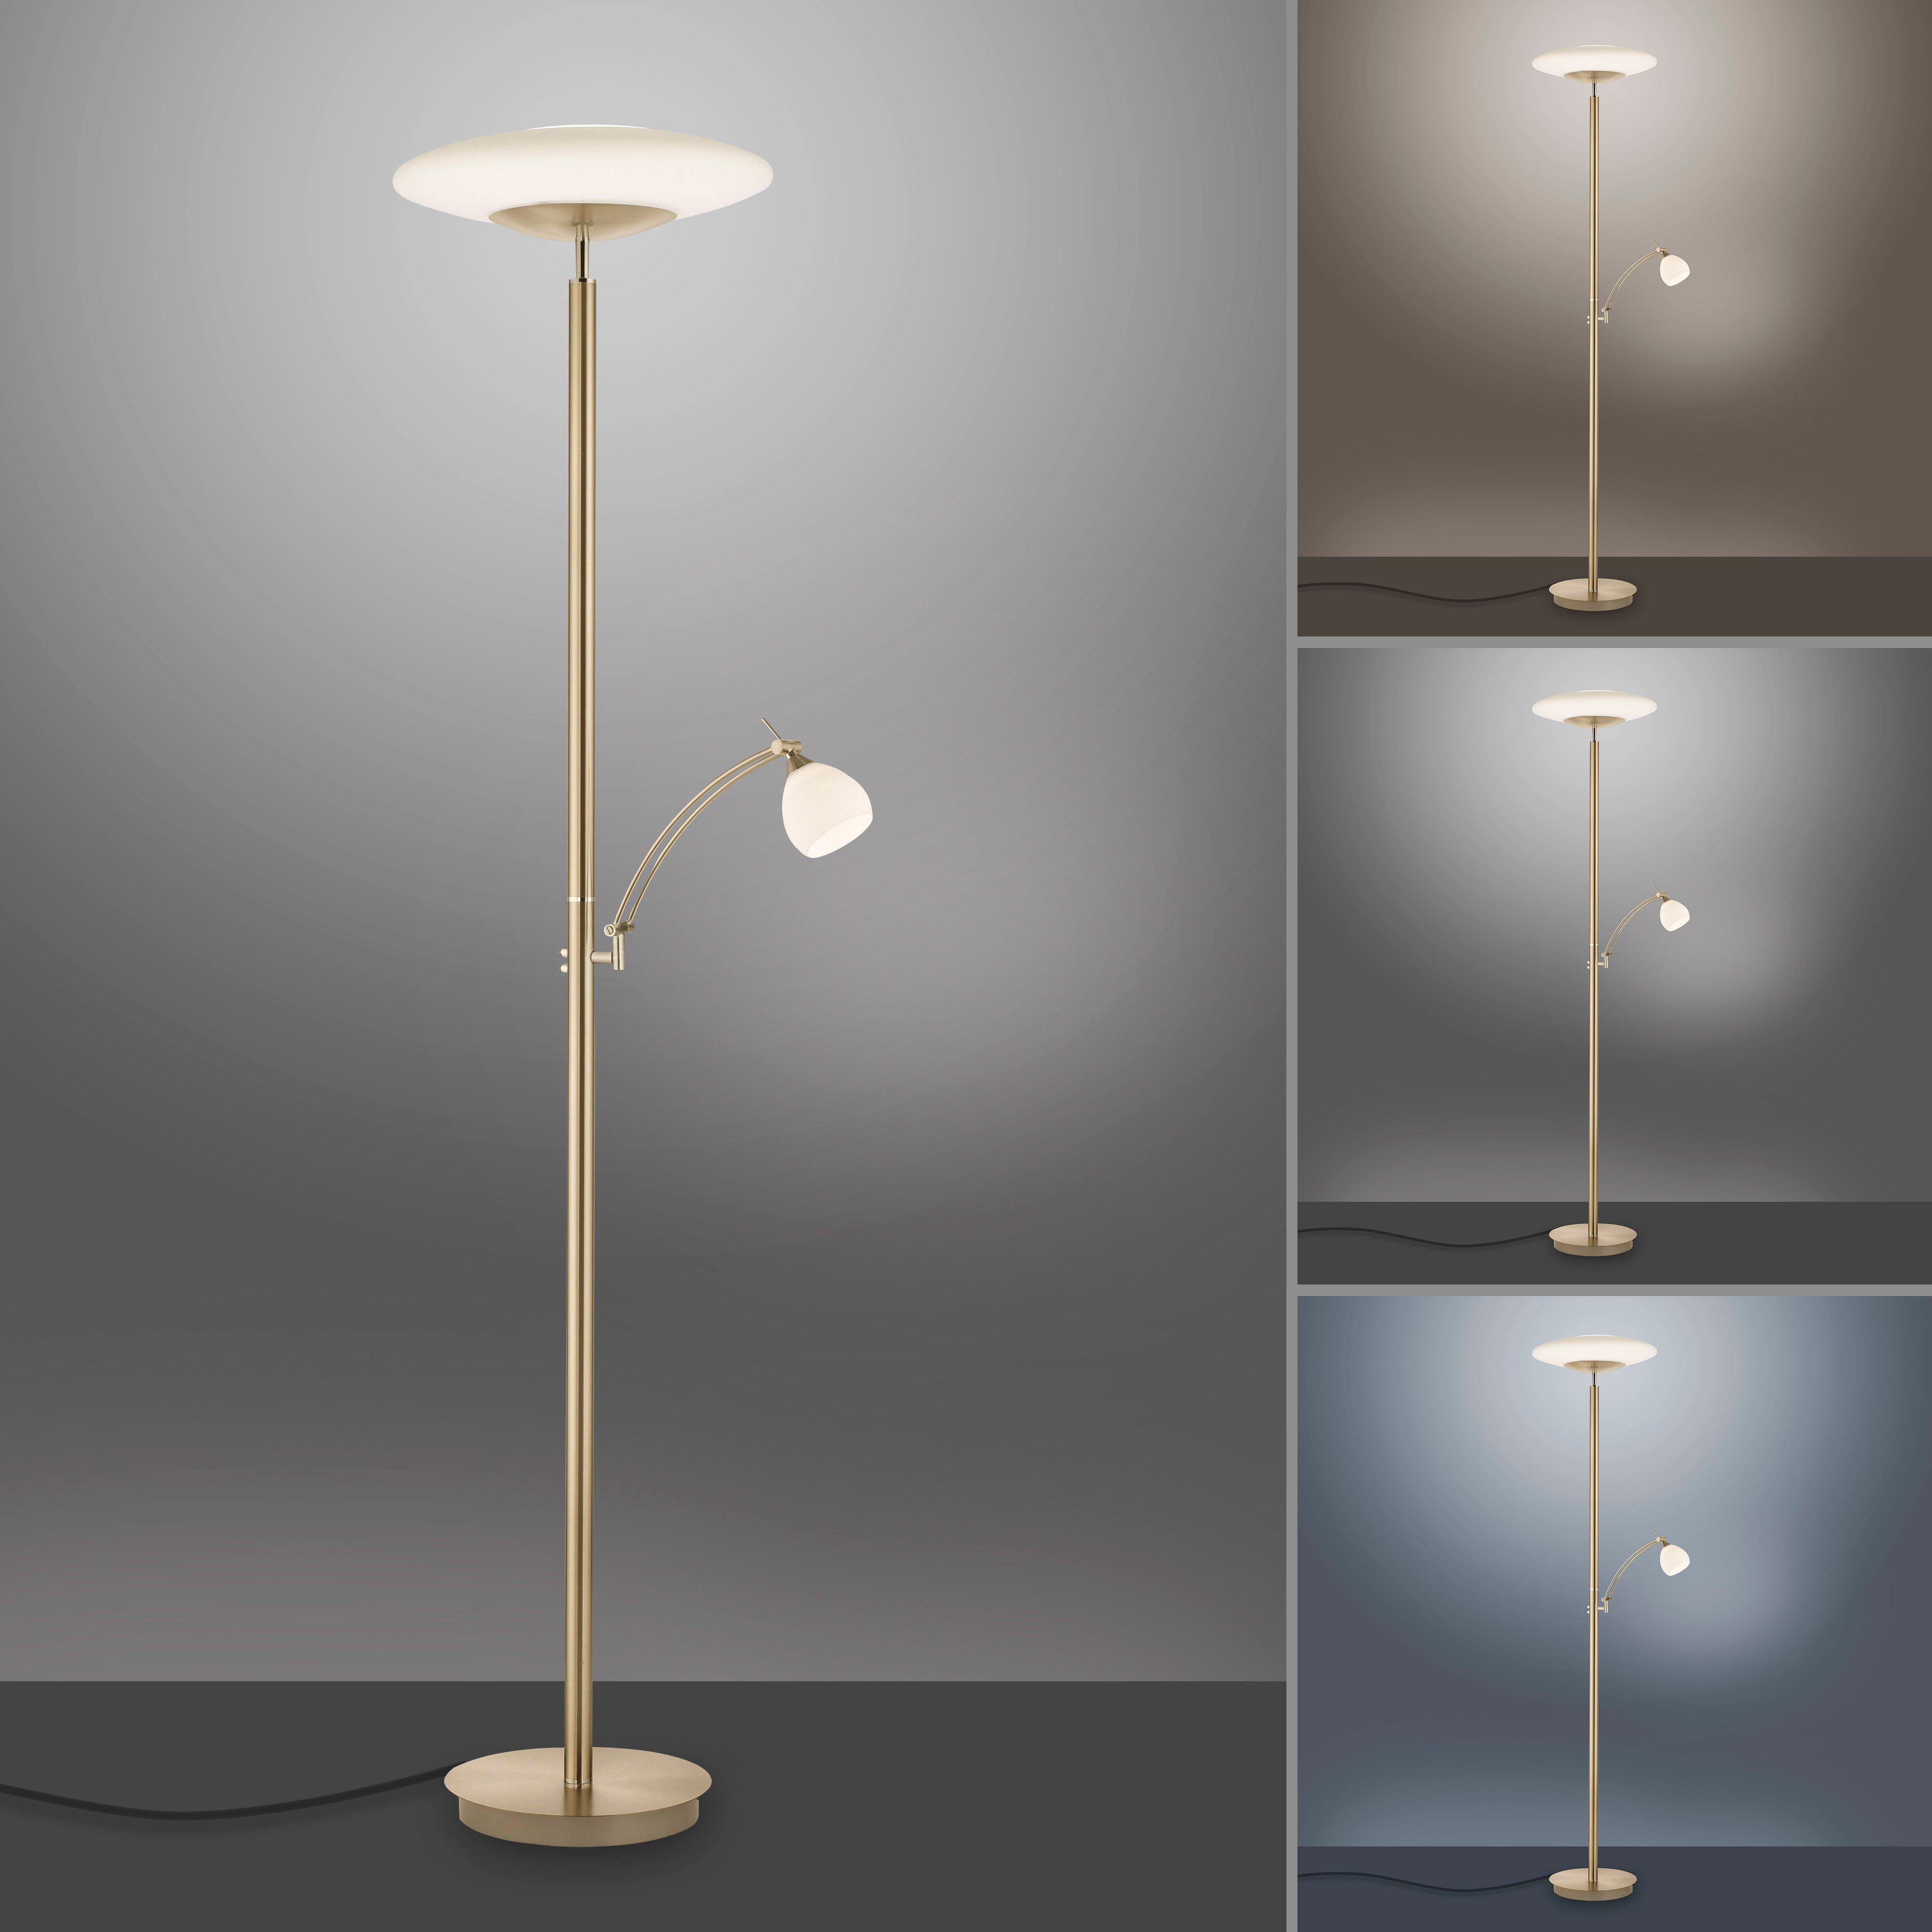 Paul Neuhaus Stehlampe TROJA, LED - CCT tunable dimmbar fest Tastdimmer, white, über LED, Memory kaltweiß, warmweiß integriert, 